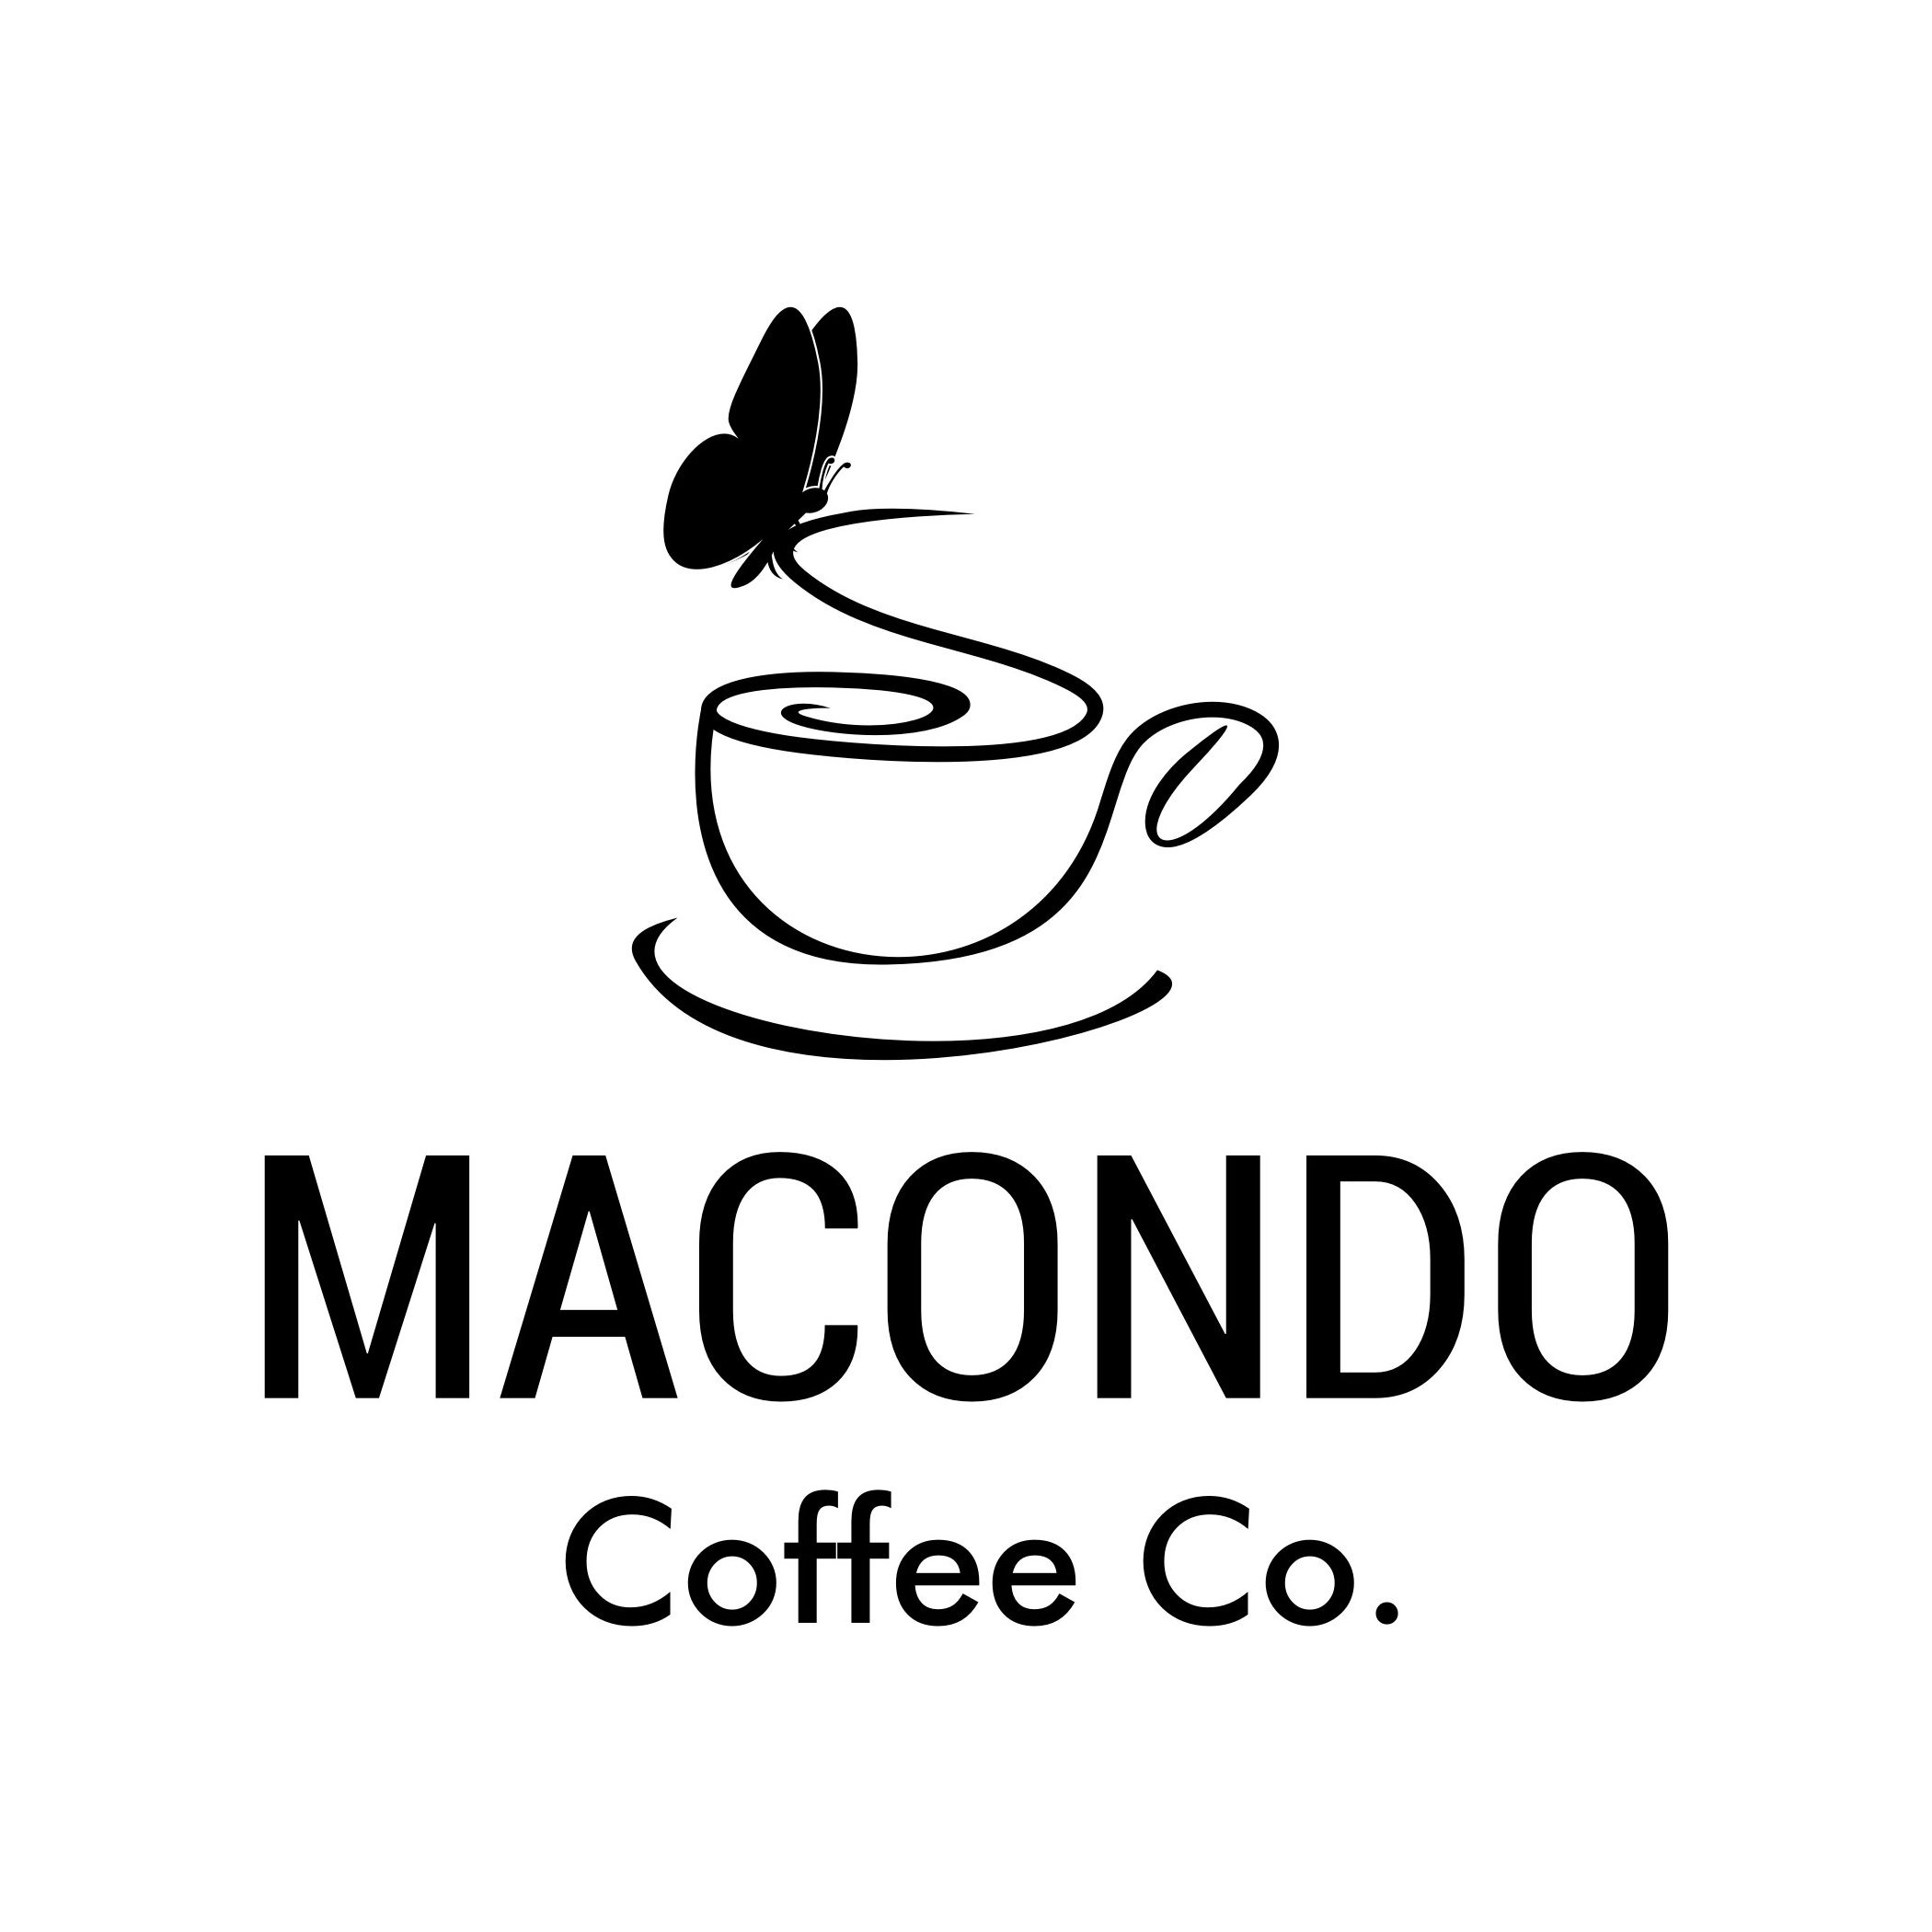  MACONDO COFFEE CO.